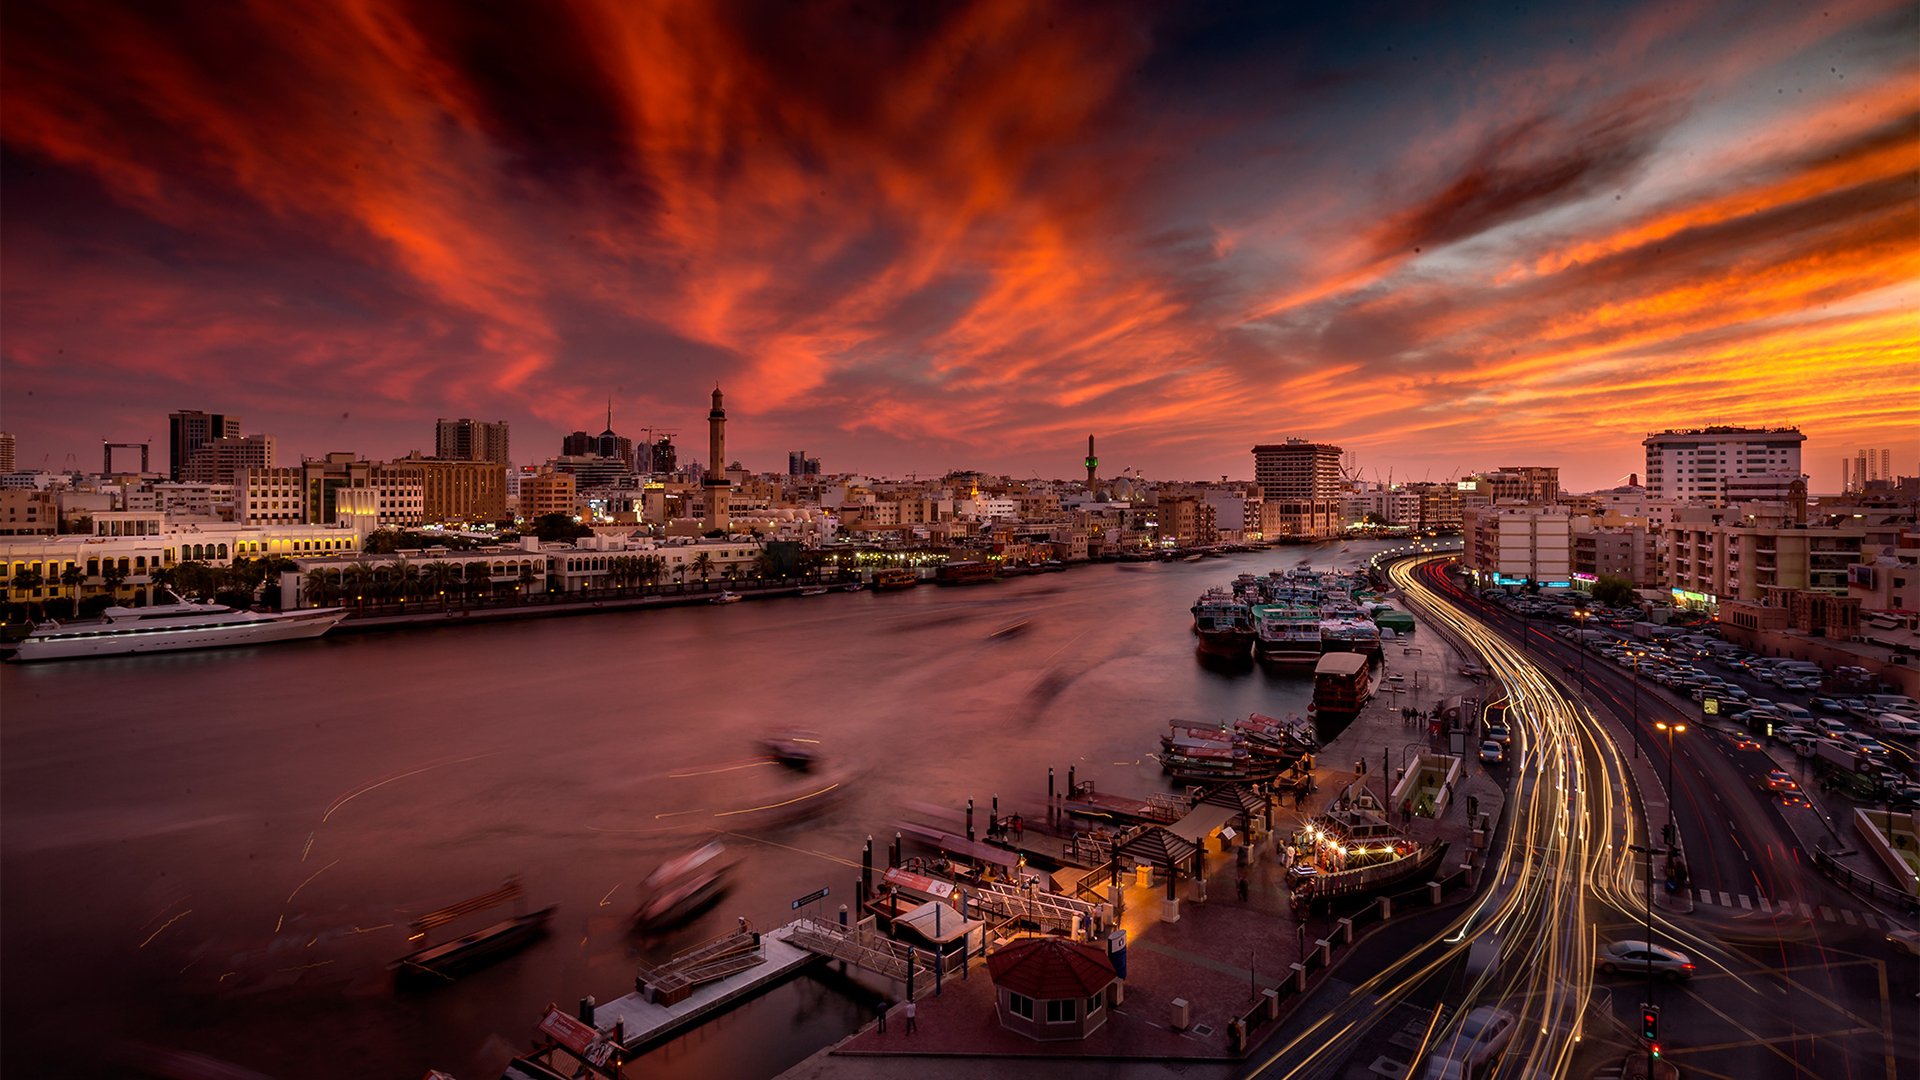  Cityscape  Sunset HD  Wallpaper  Background Image 